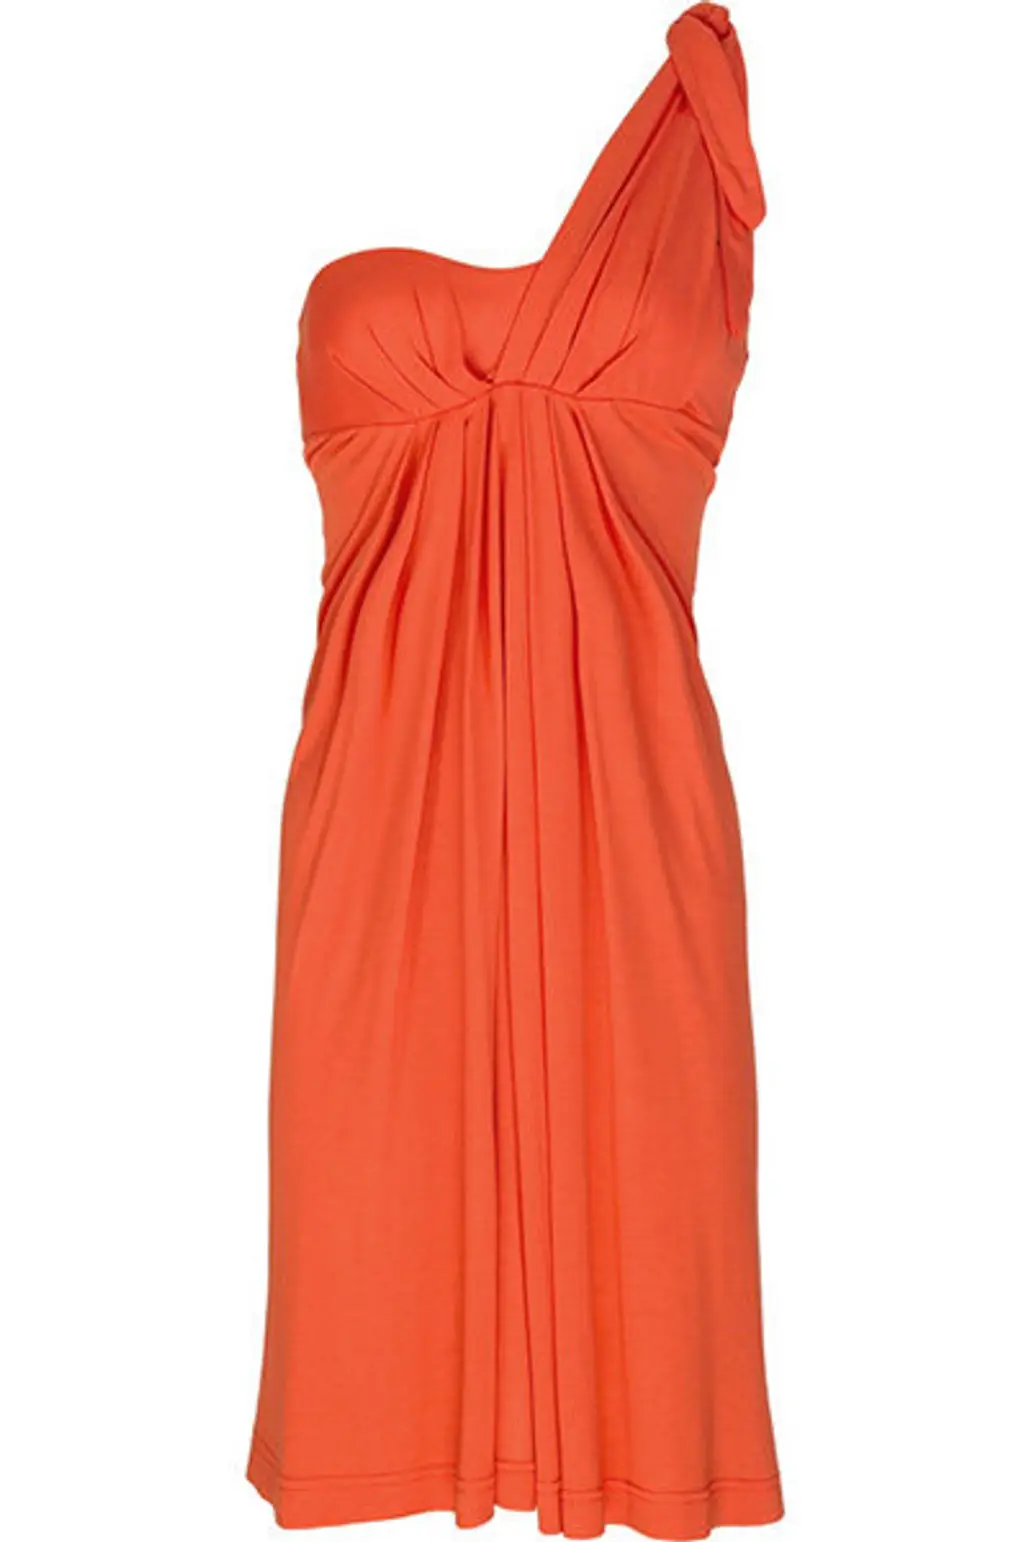 JETS by Jessika Allen One-shouldered Jersey Dress